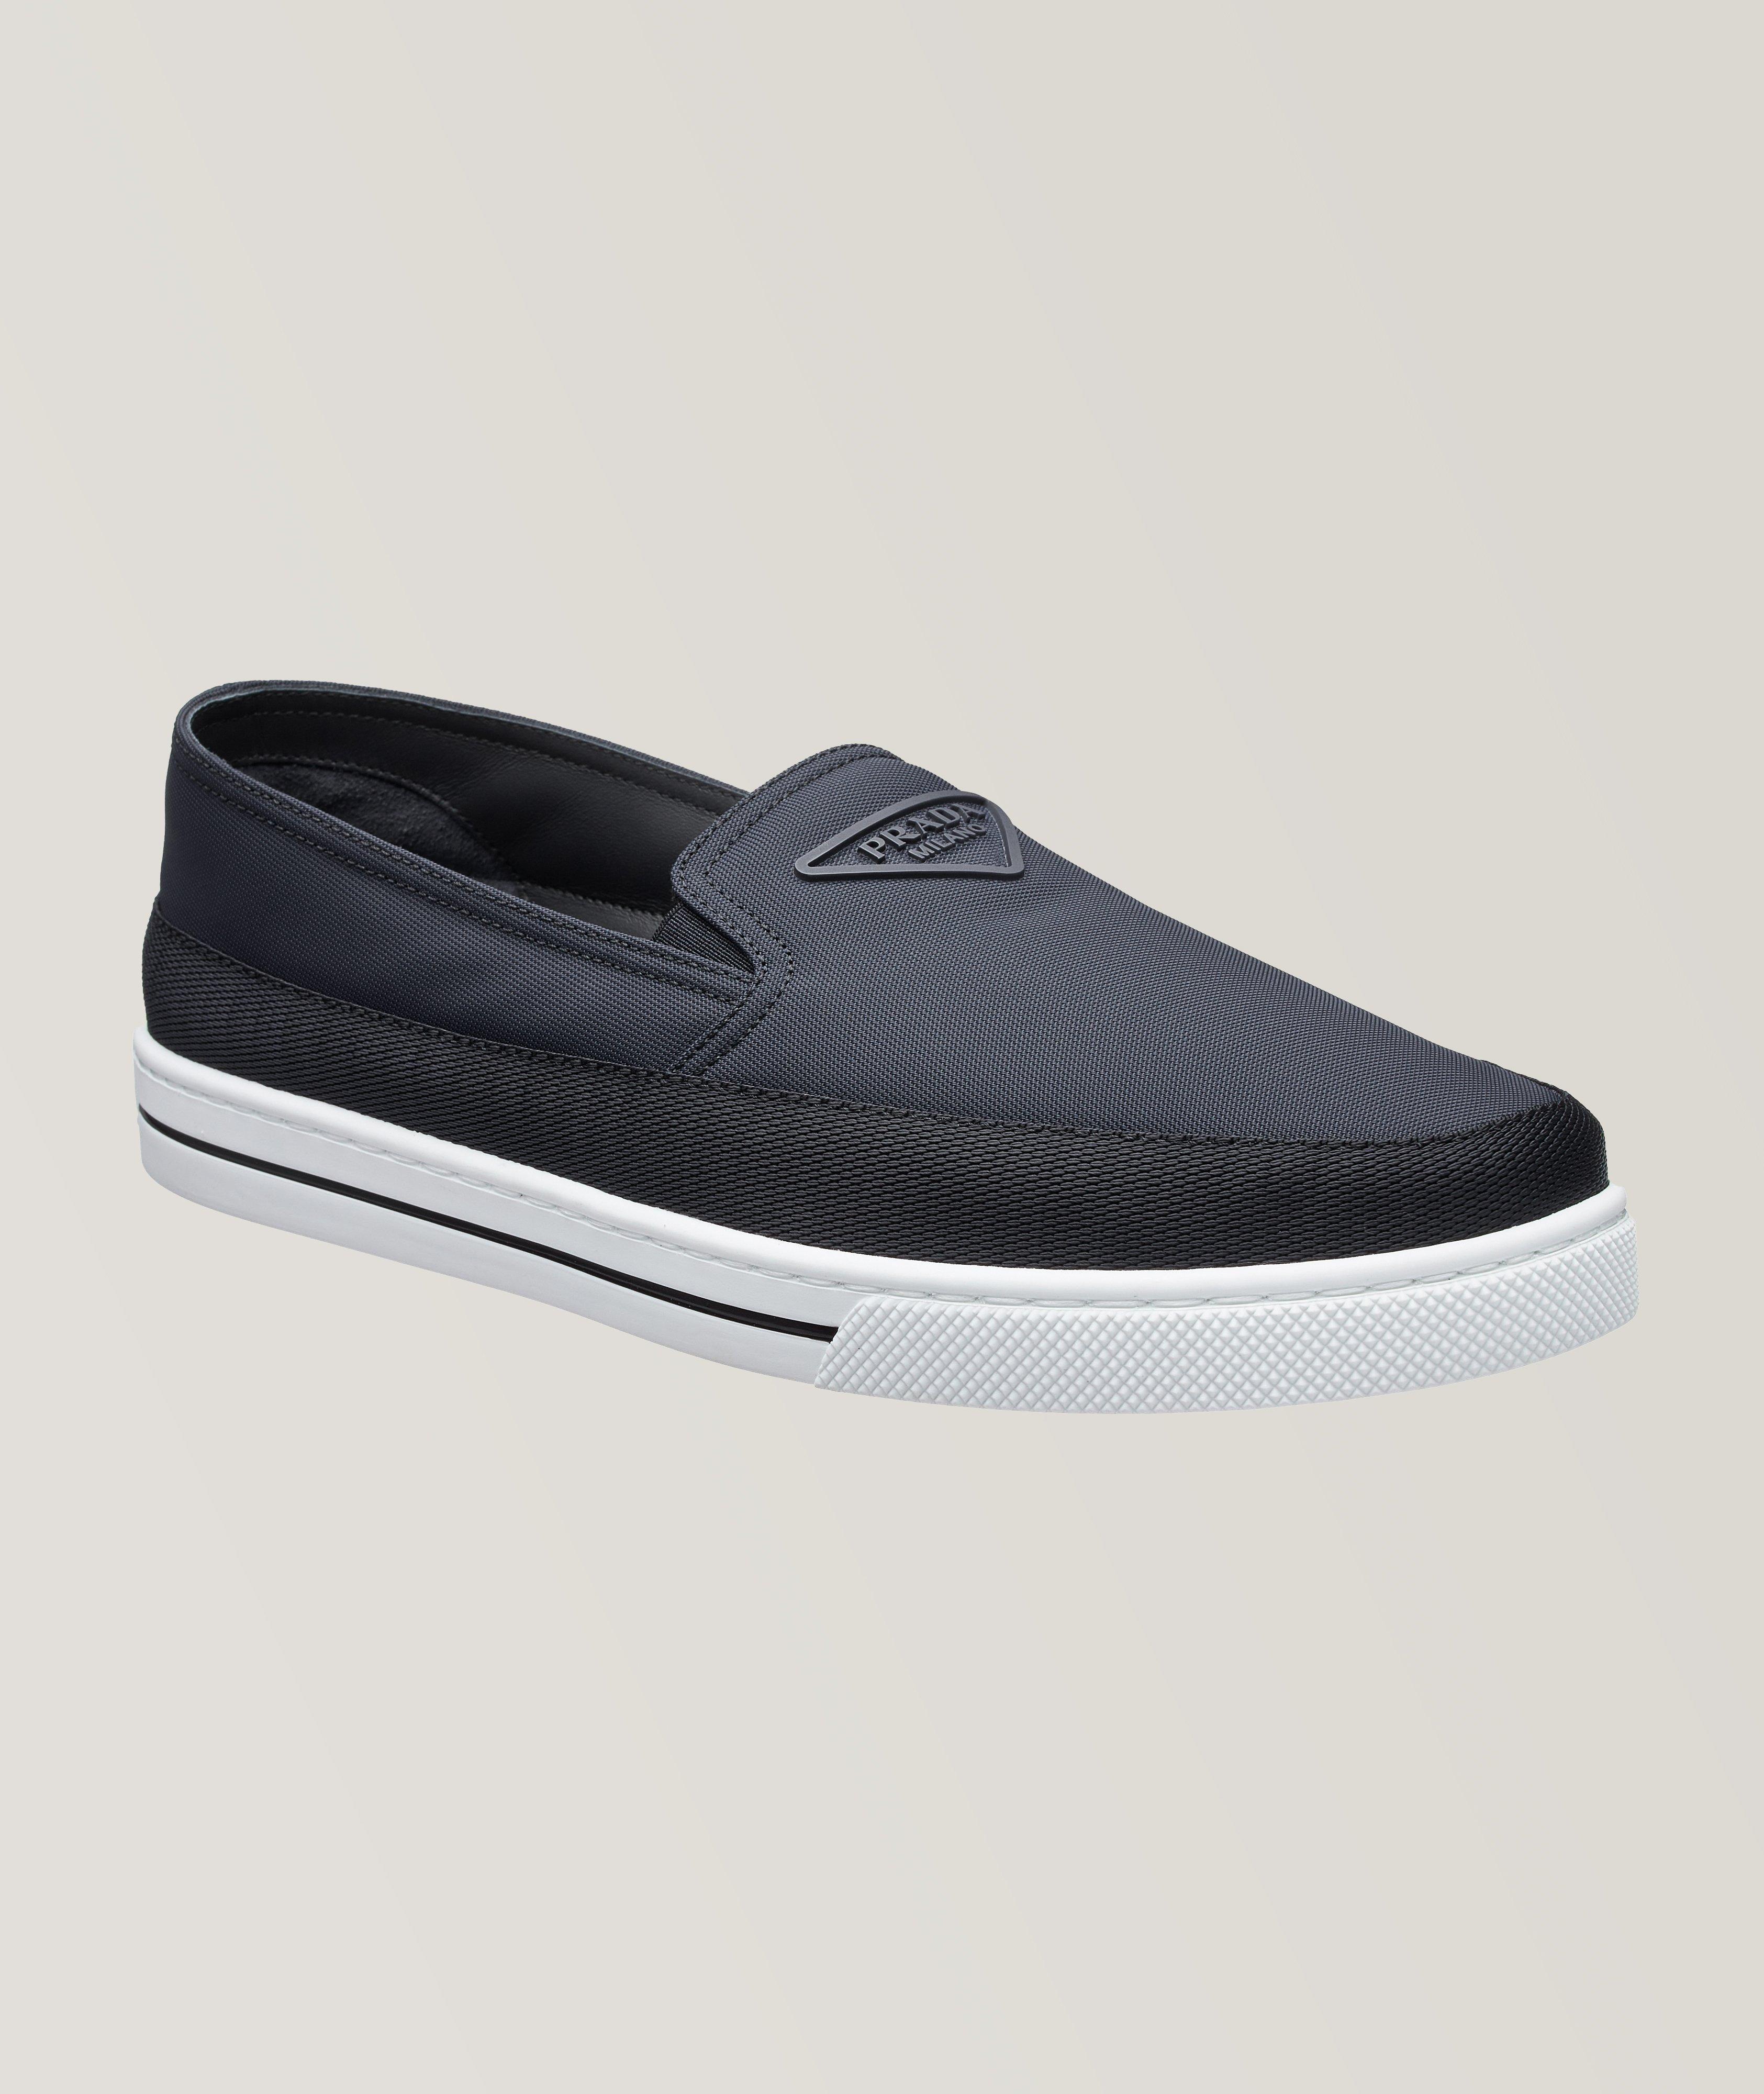 Nylon Slip-On Sneakers image 0